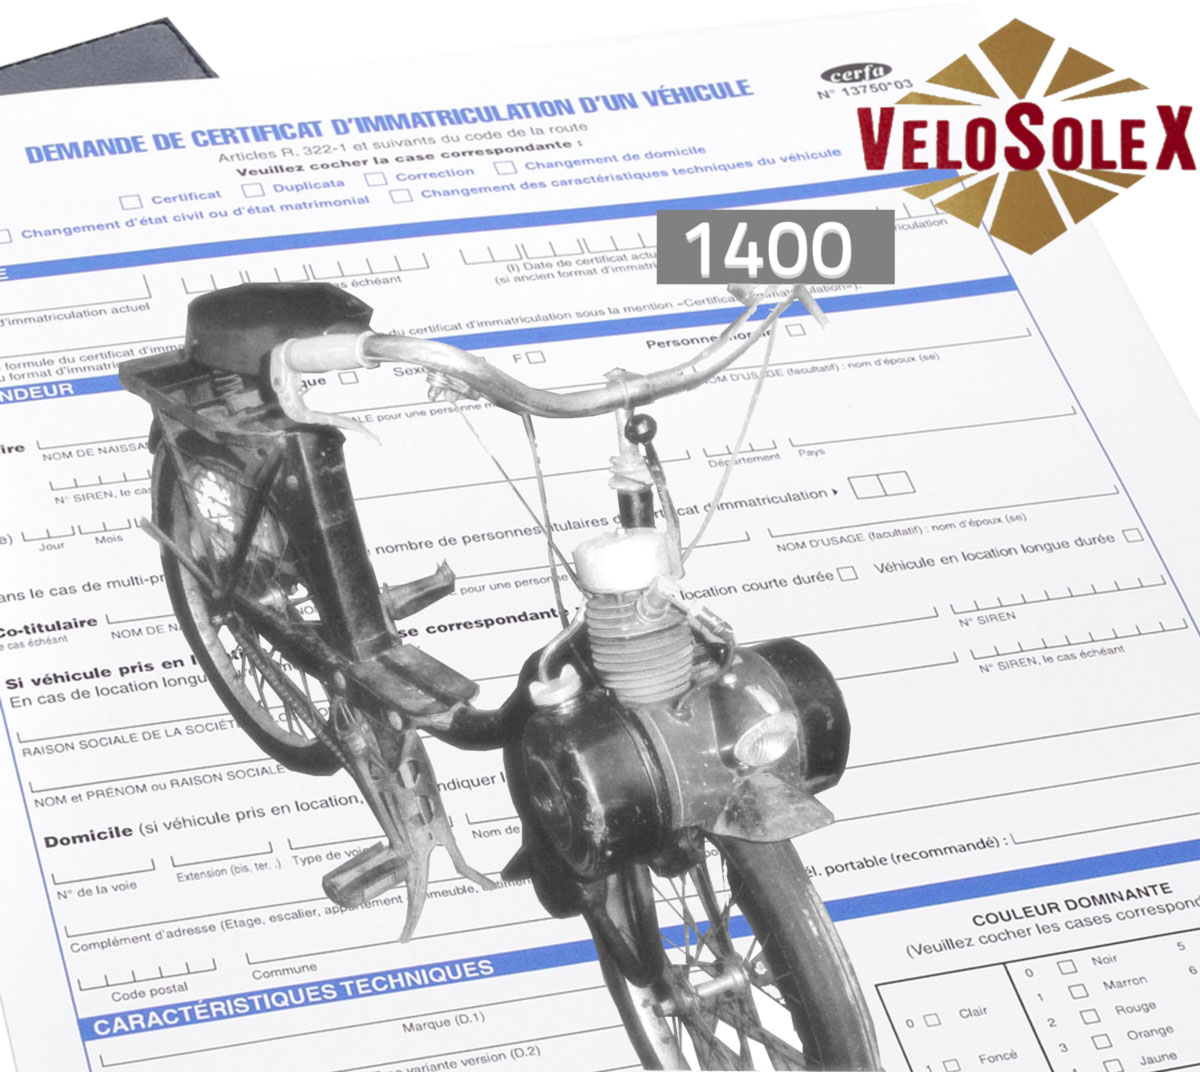 Demande de Certificat d'immatriculation pour Velosolex 1400